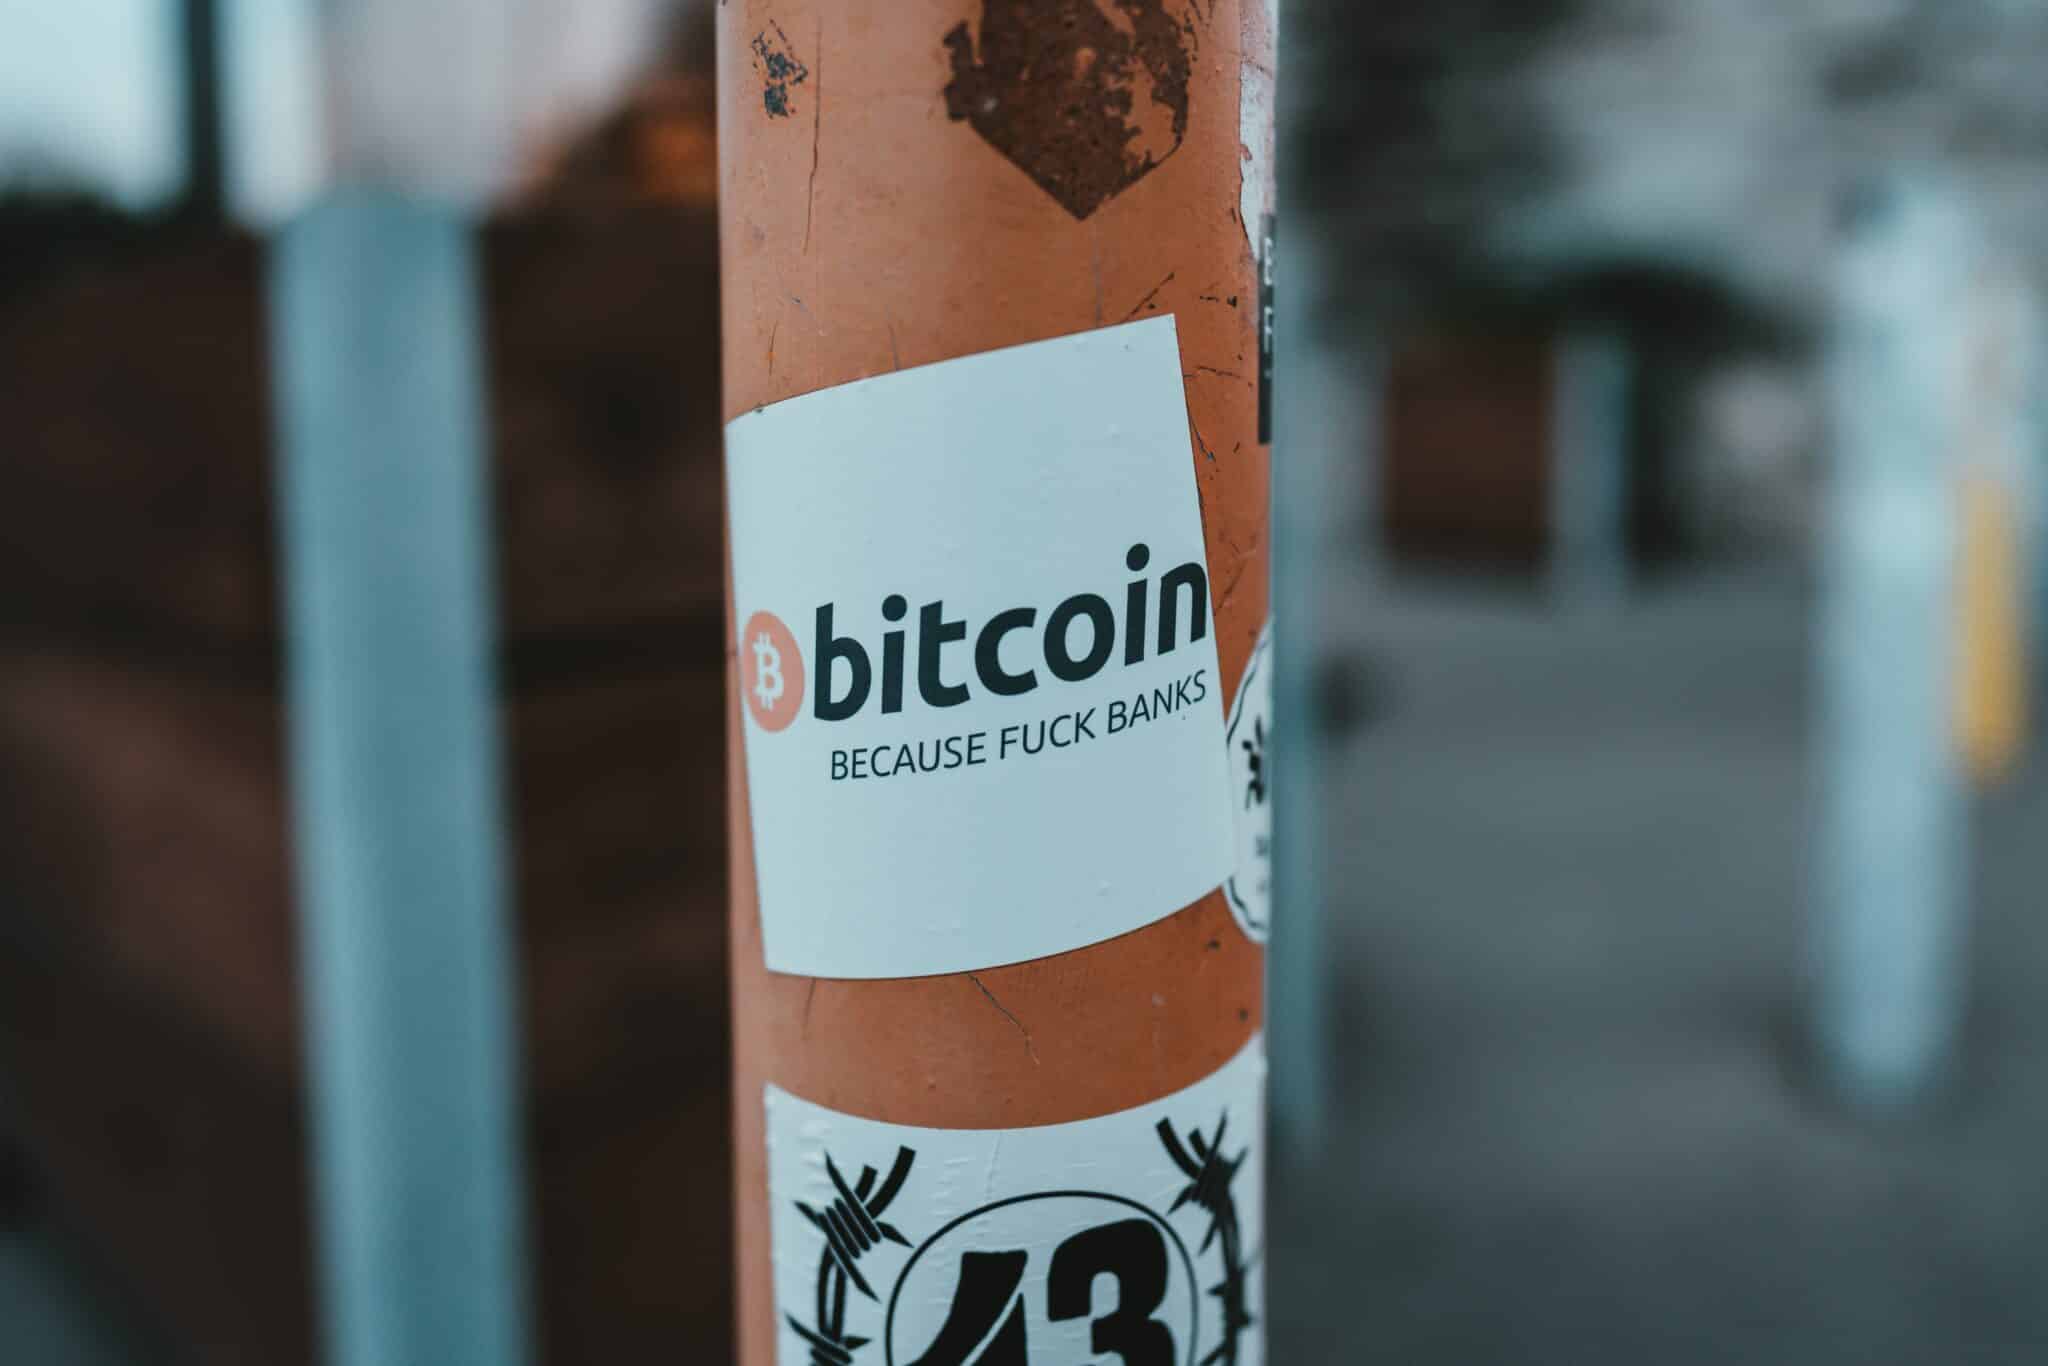 Autocollant "Bitcoin because fuck banks" collé sur un poteau.